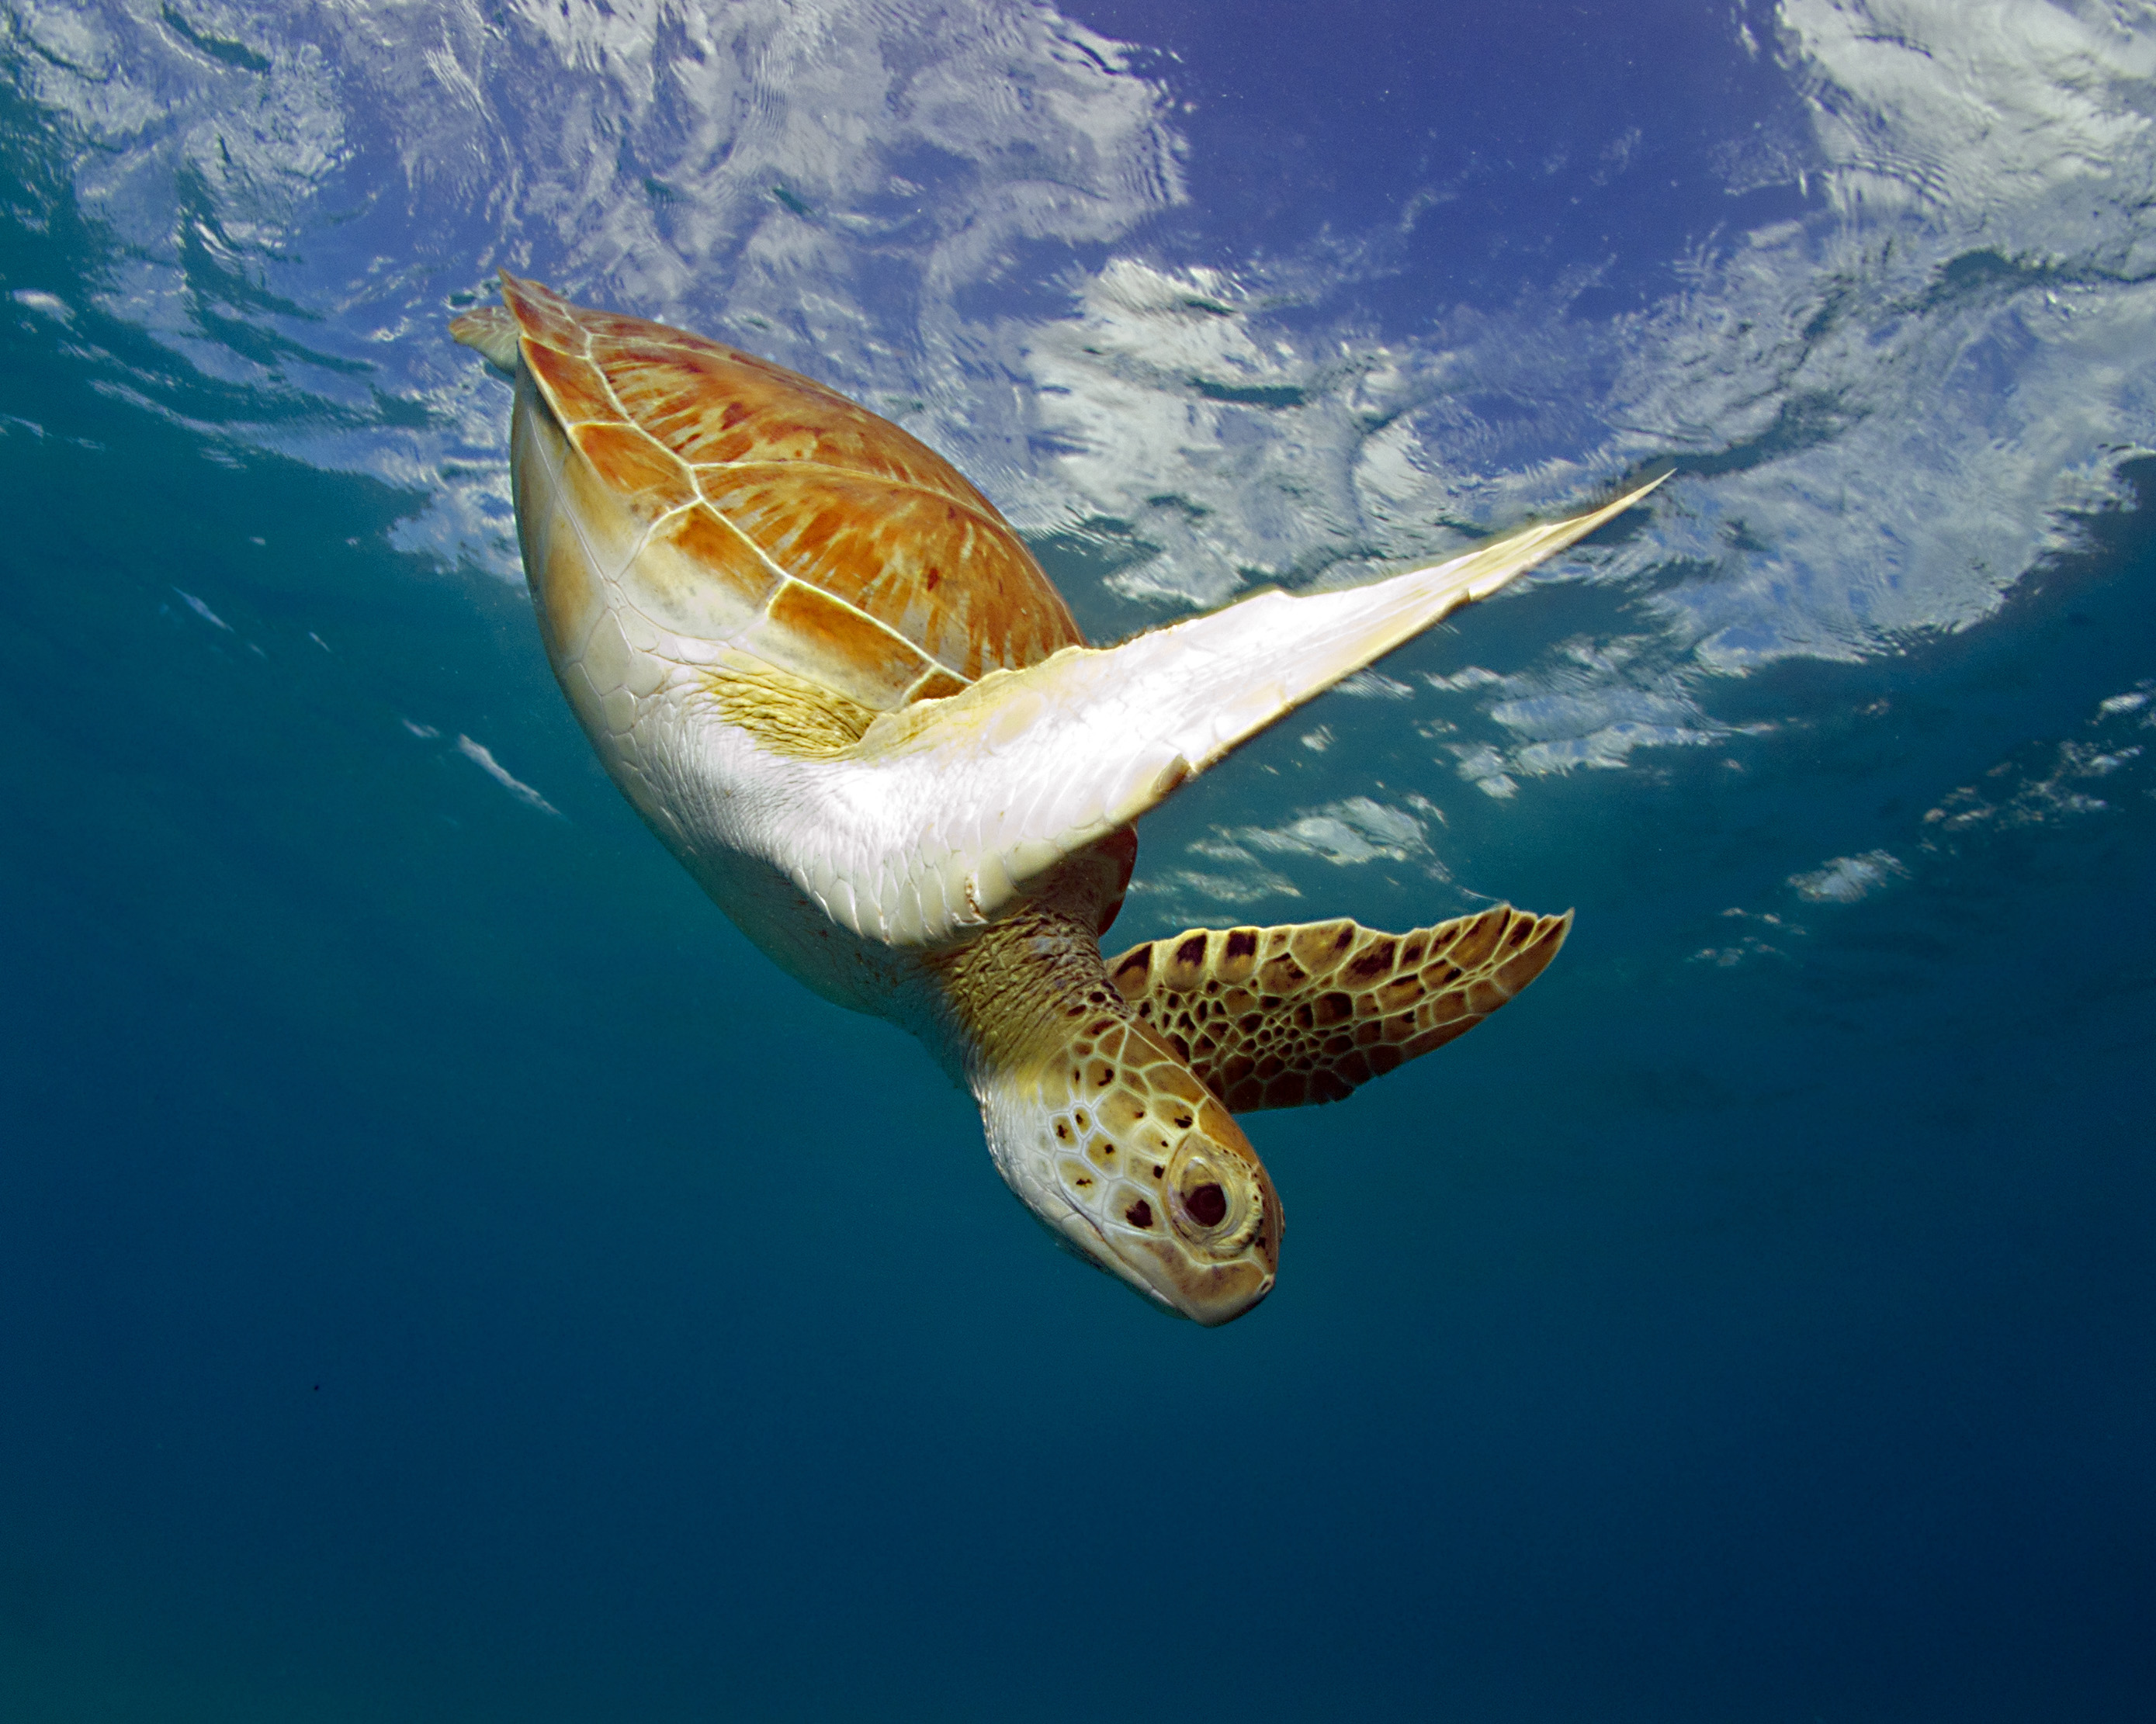 N2theBlue Scuba Diving -- Turtle